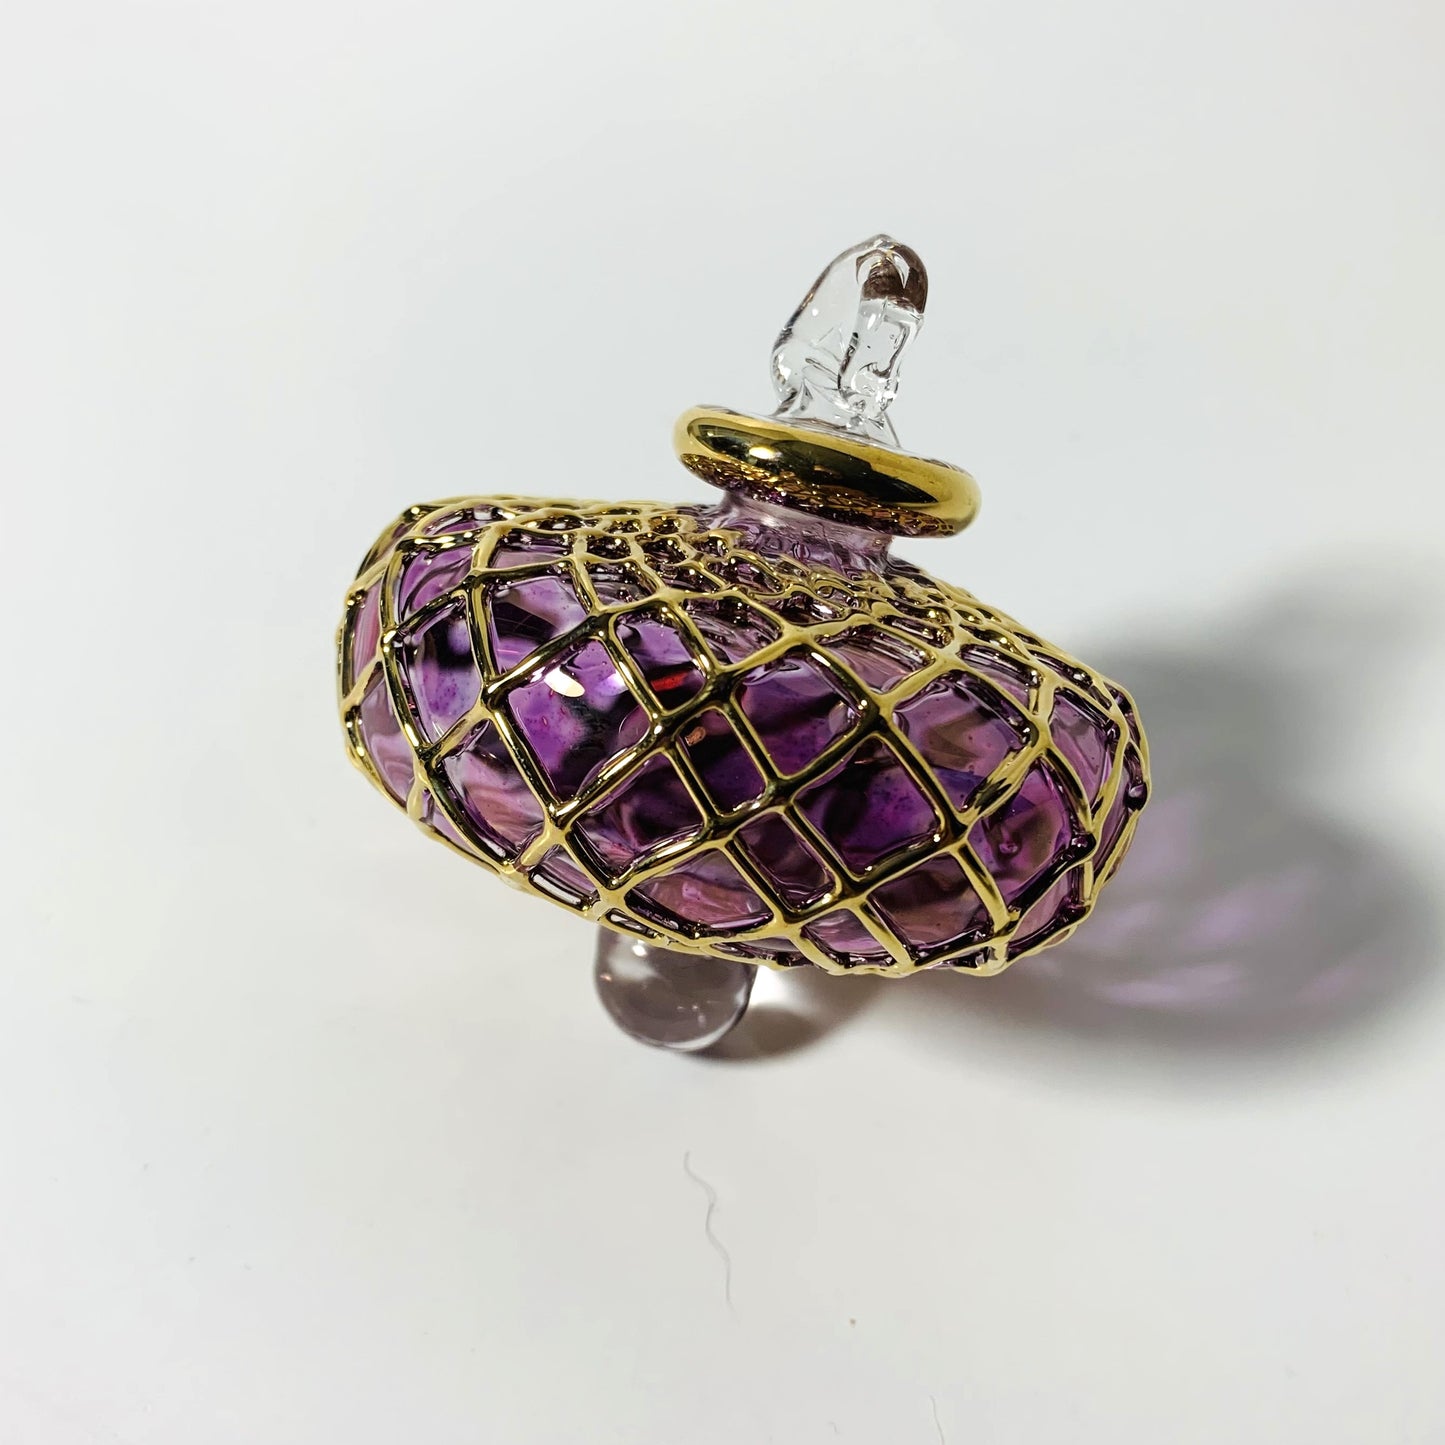 Blown Glass Small Ornament - Diamond Toupie